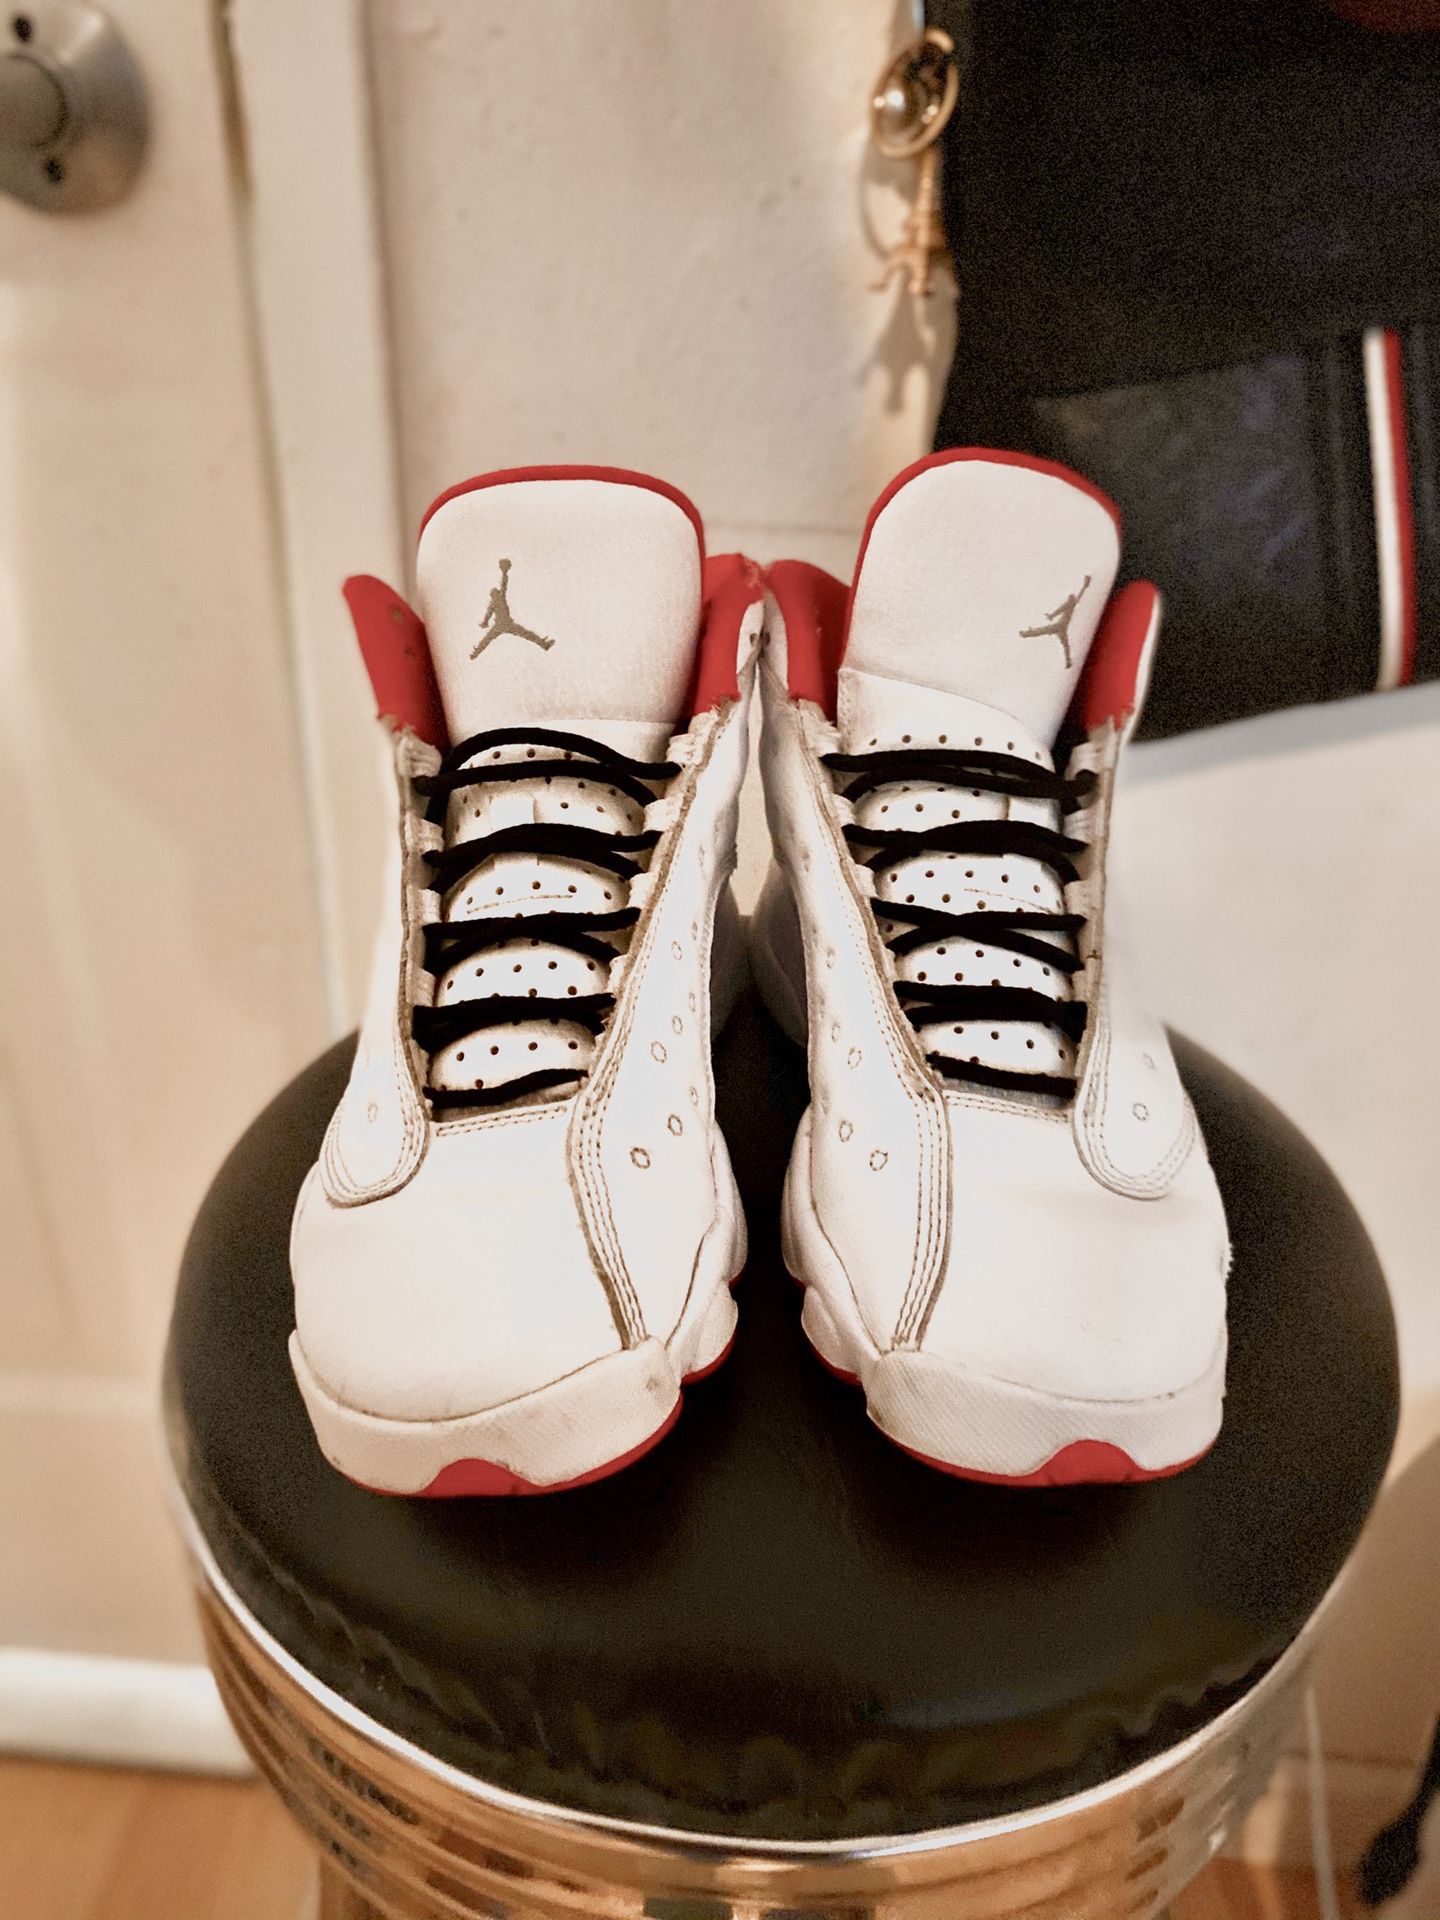 Air Jordan 13 Retro size 4.5